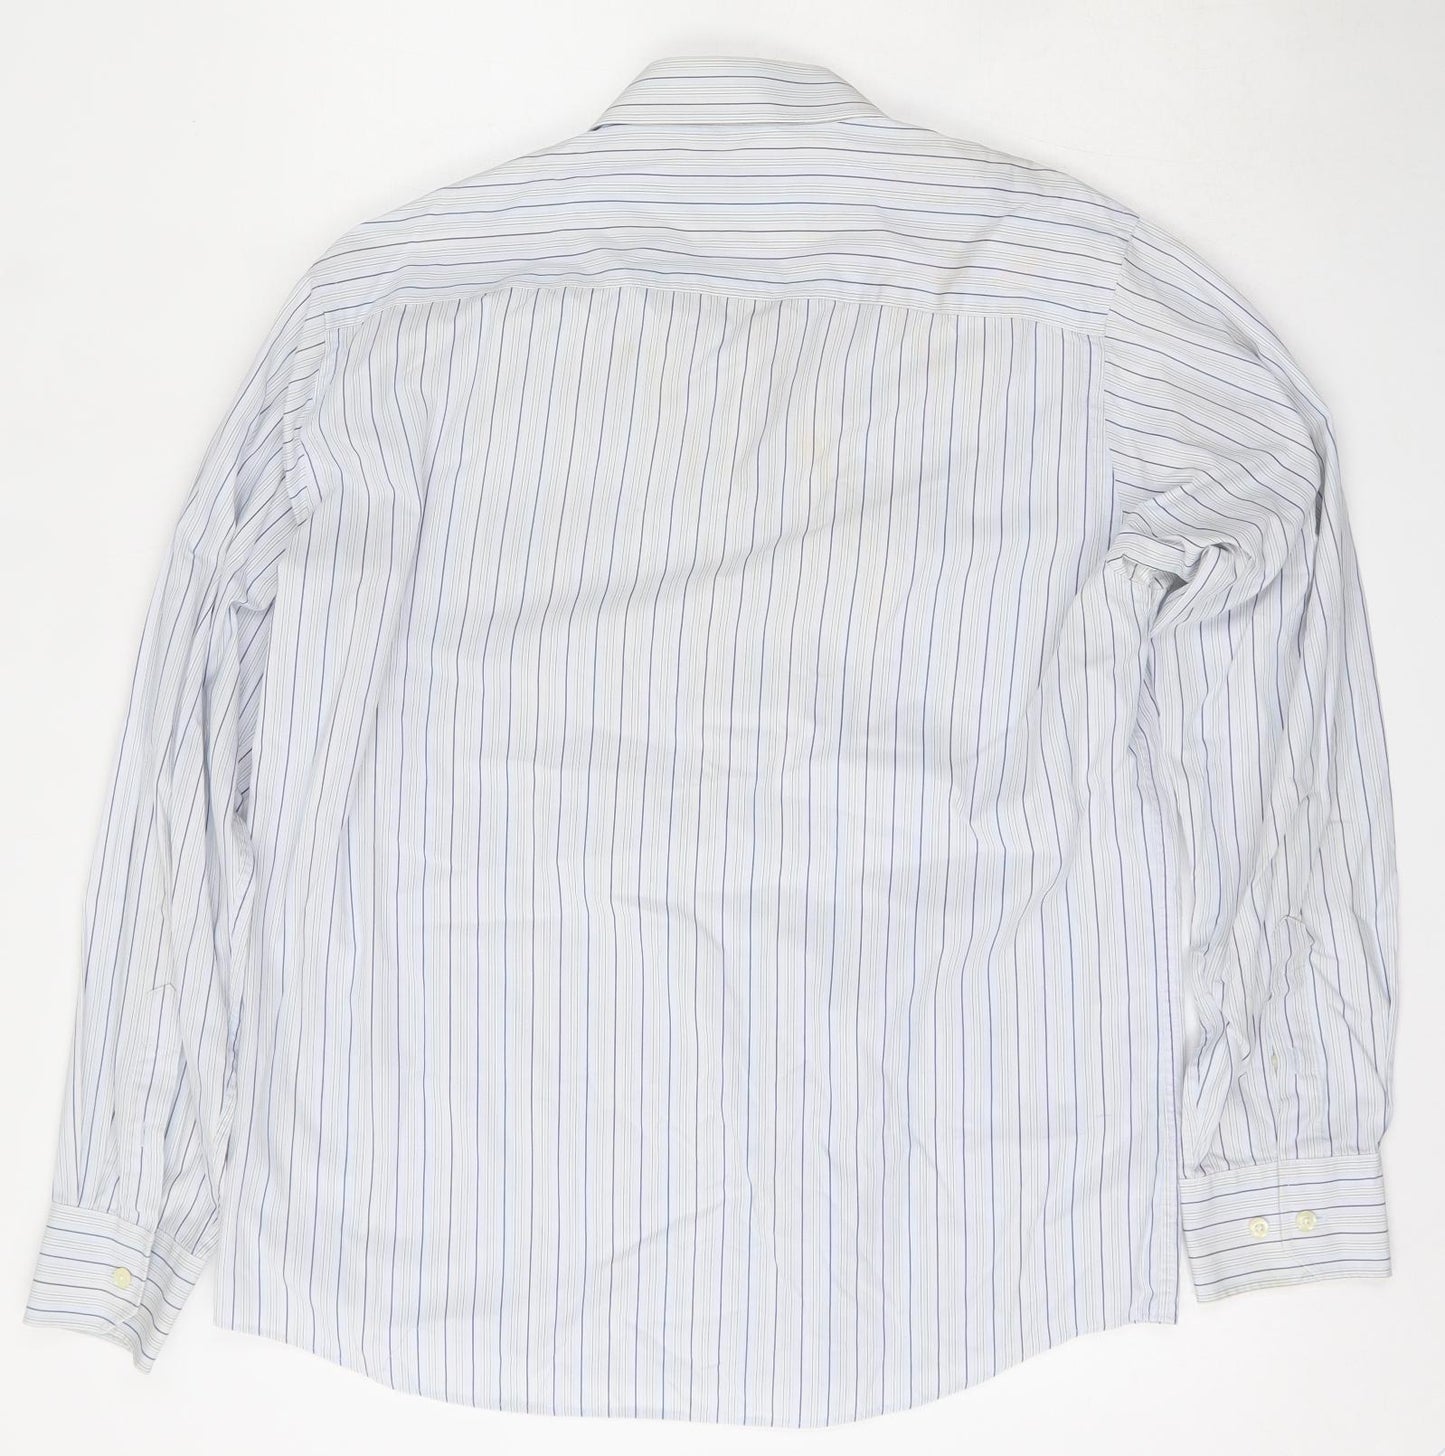 Lakeland Mens Multicoloured Striped Cotton  Dress Shirt Size L Collared Button